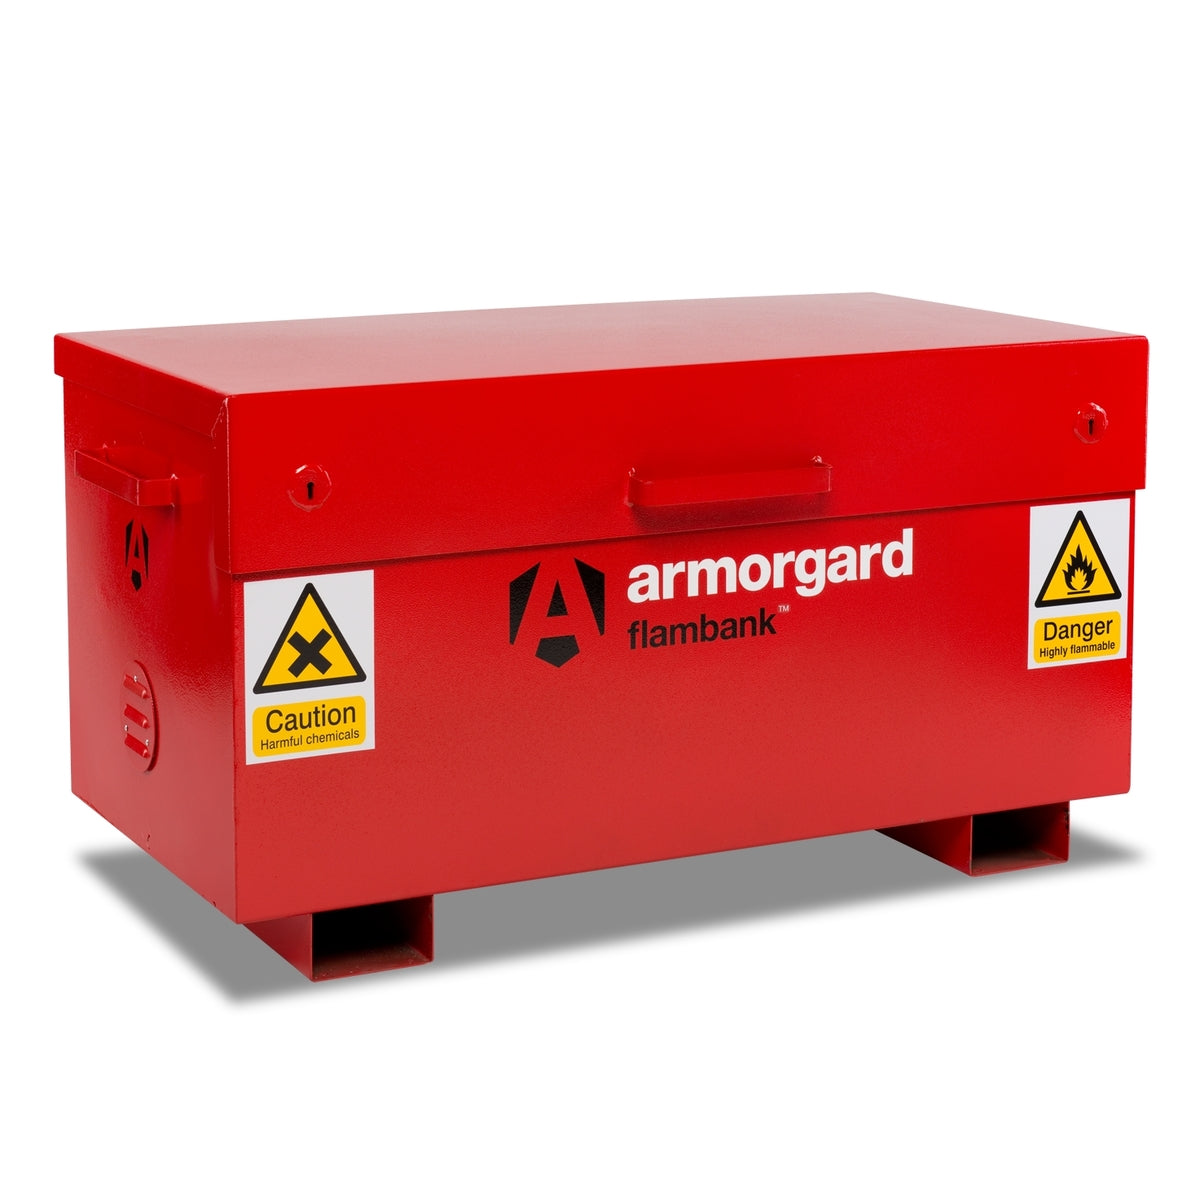 Armorgard FB2 Flambank Hazardous Storage Box 1295x630x675mm